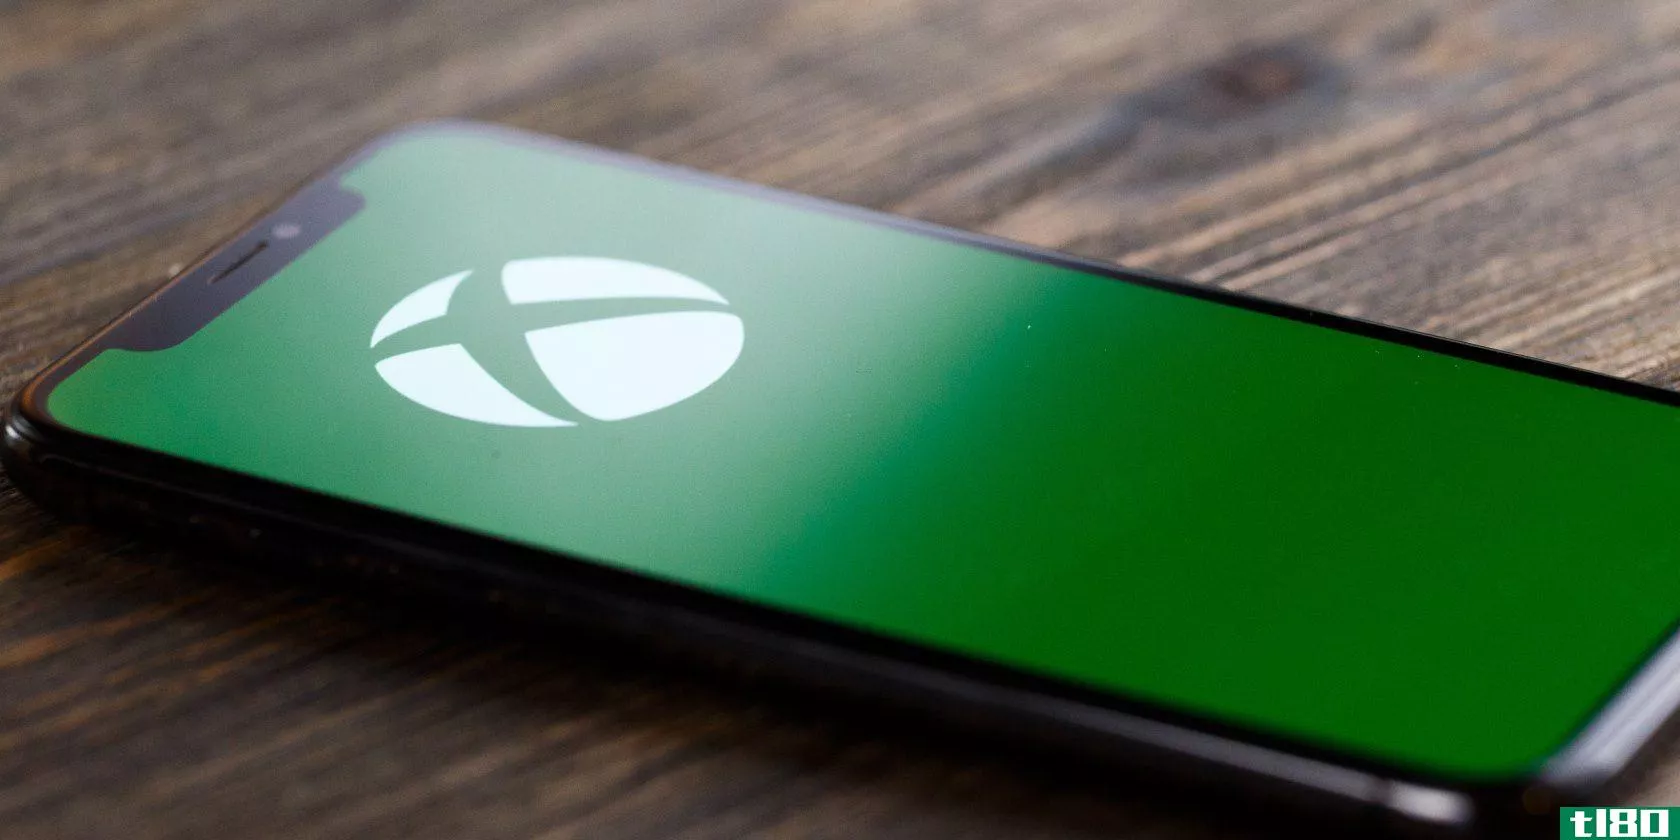 the Xbox logo on a phone